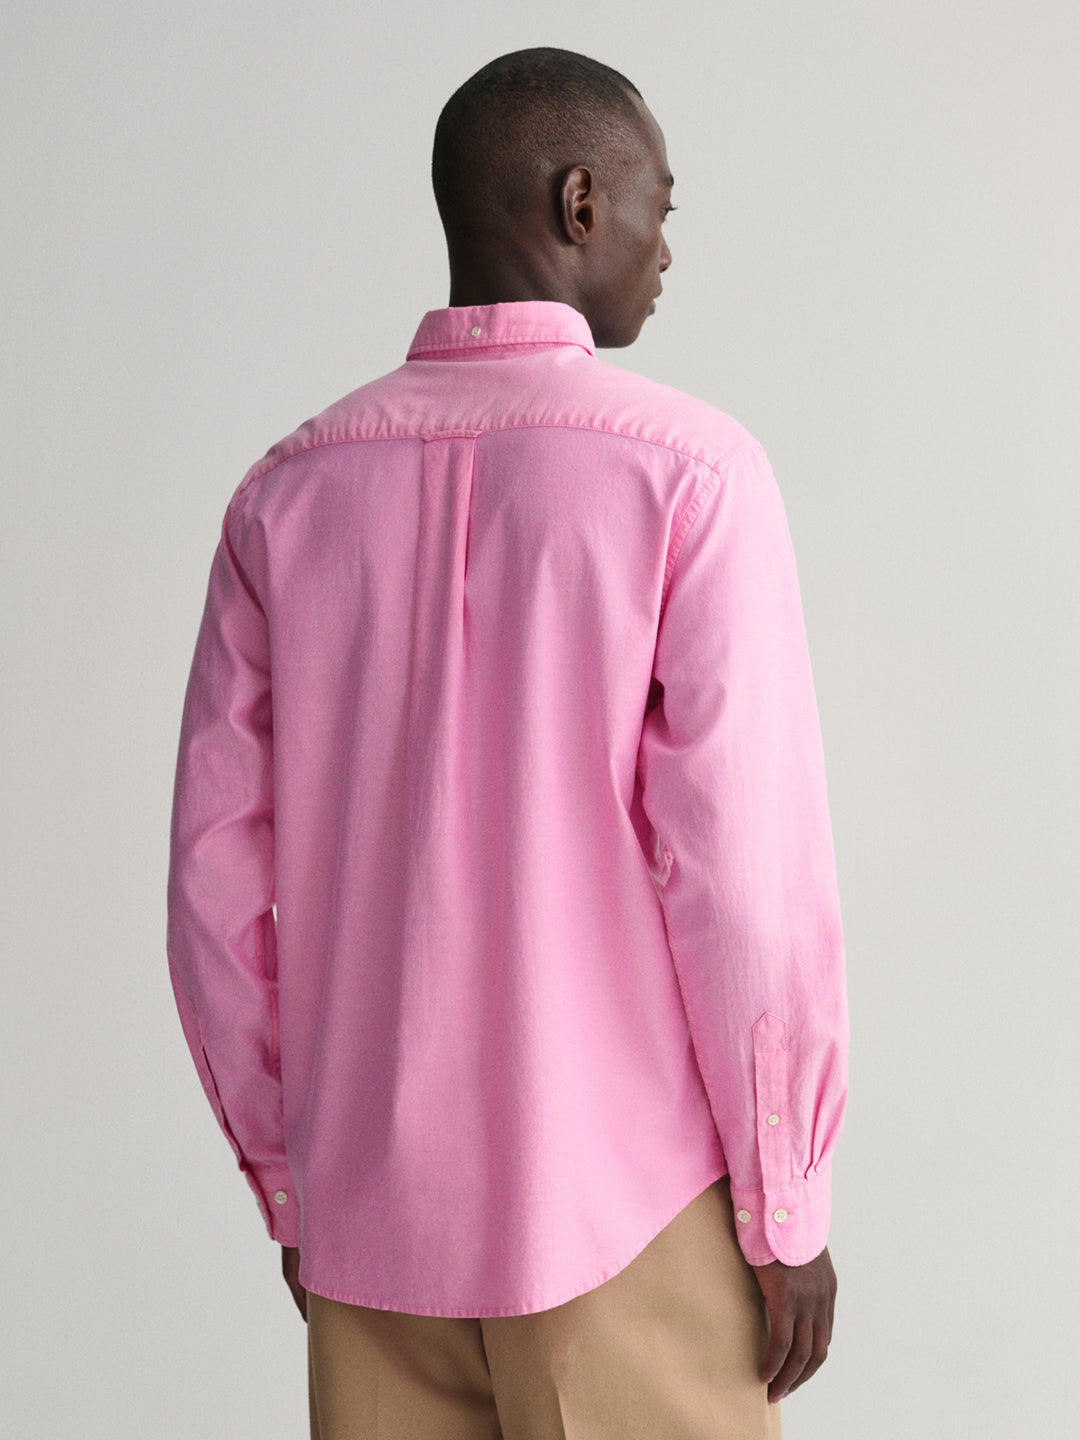 Gant Pink Oxford Regular Fit Shirt